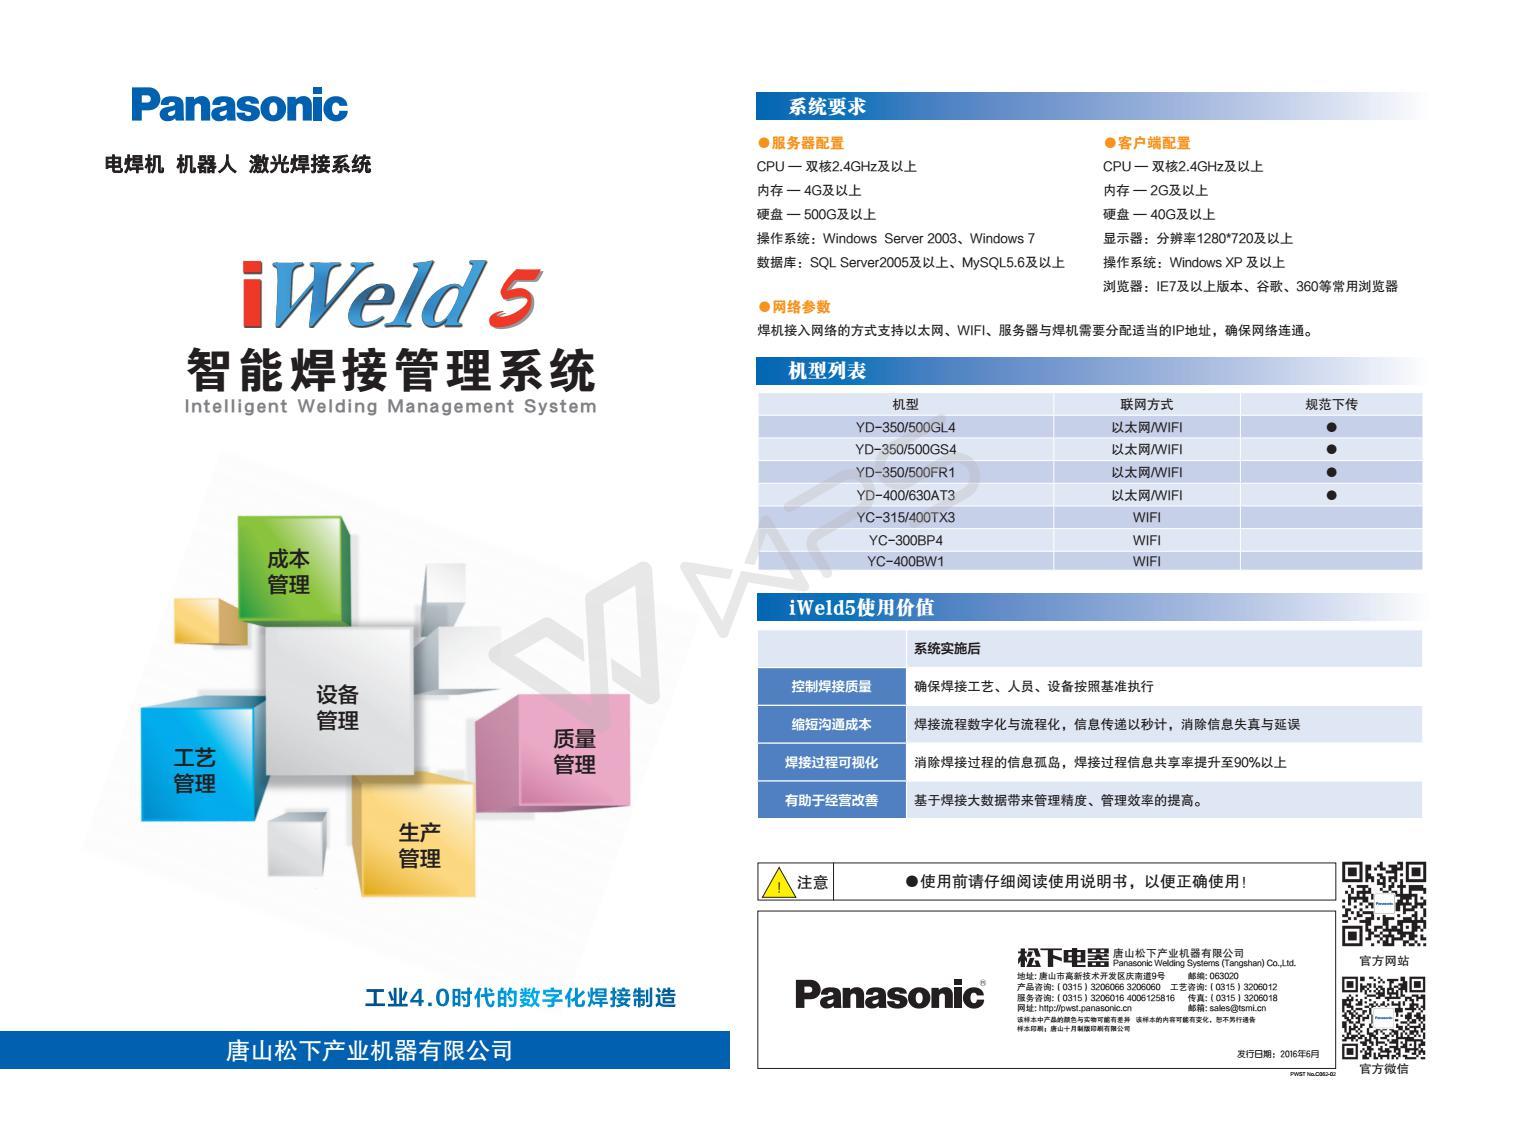 Information welding management system 5.0